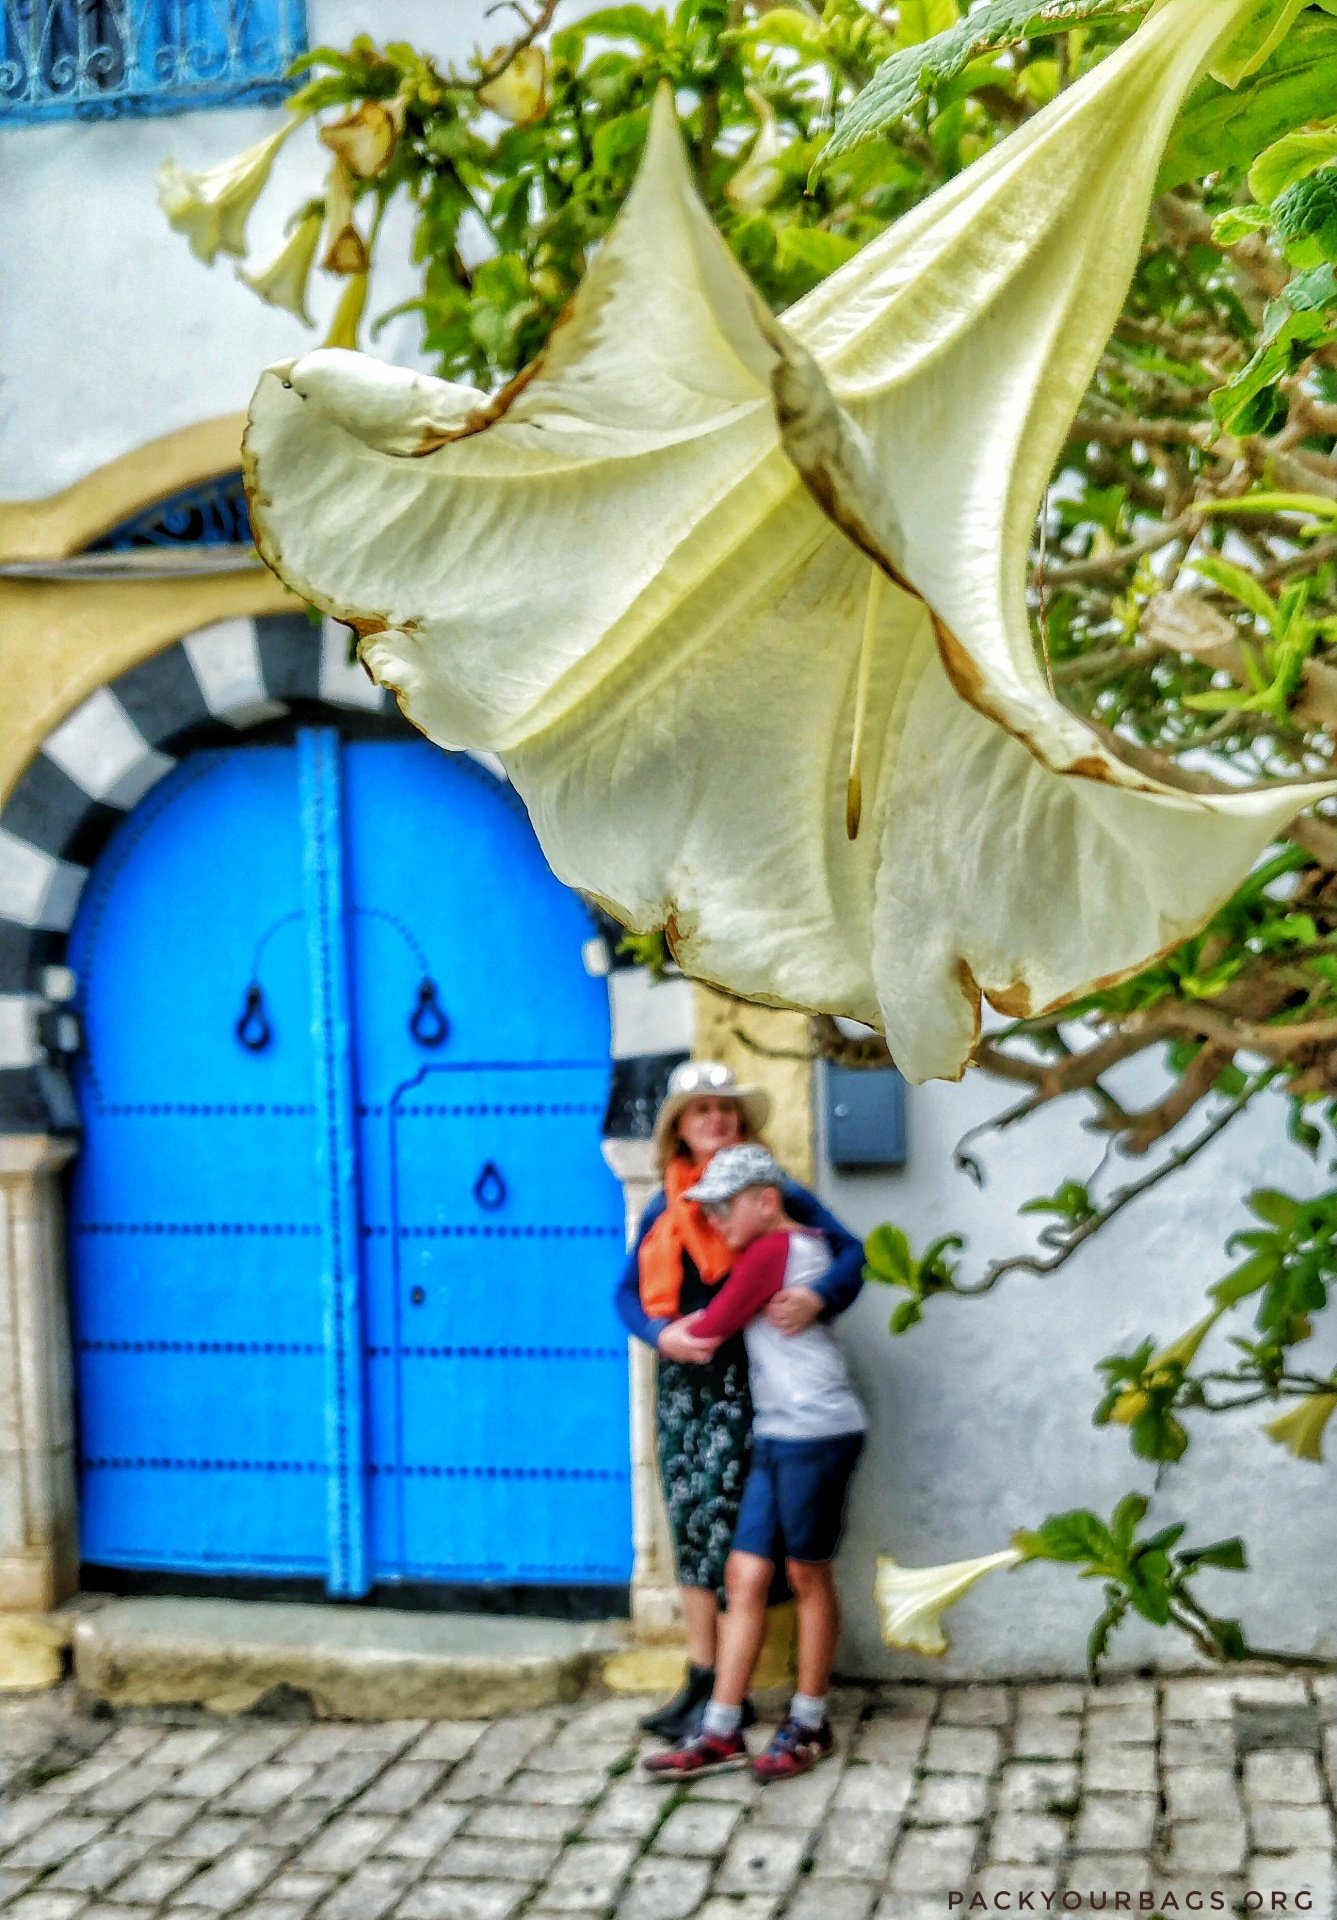 doors of Tunisia